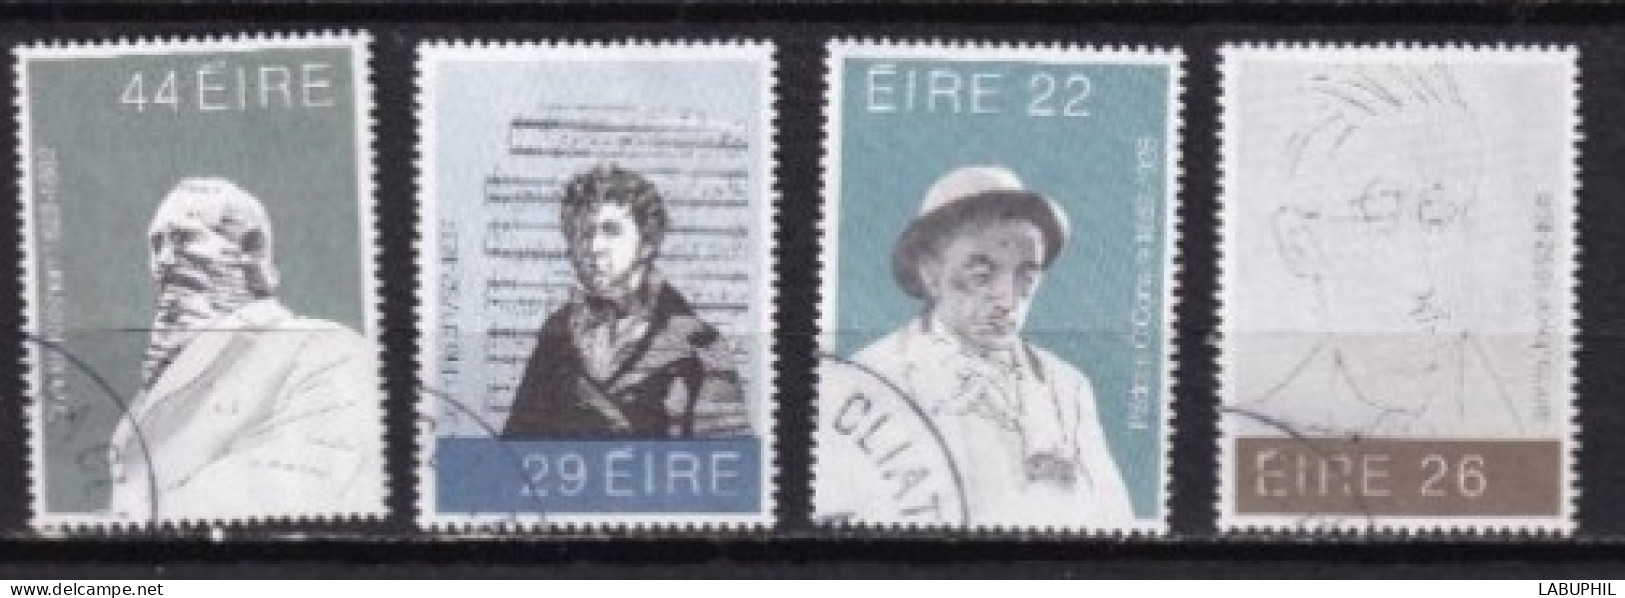 IRLANDE USED OBLITERE  1982 - Used Stamps